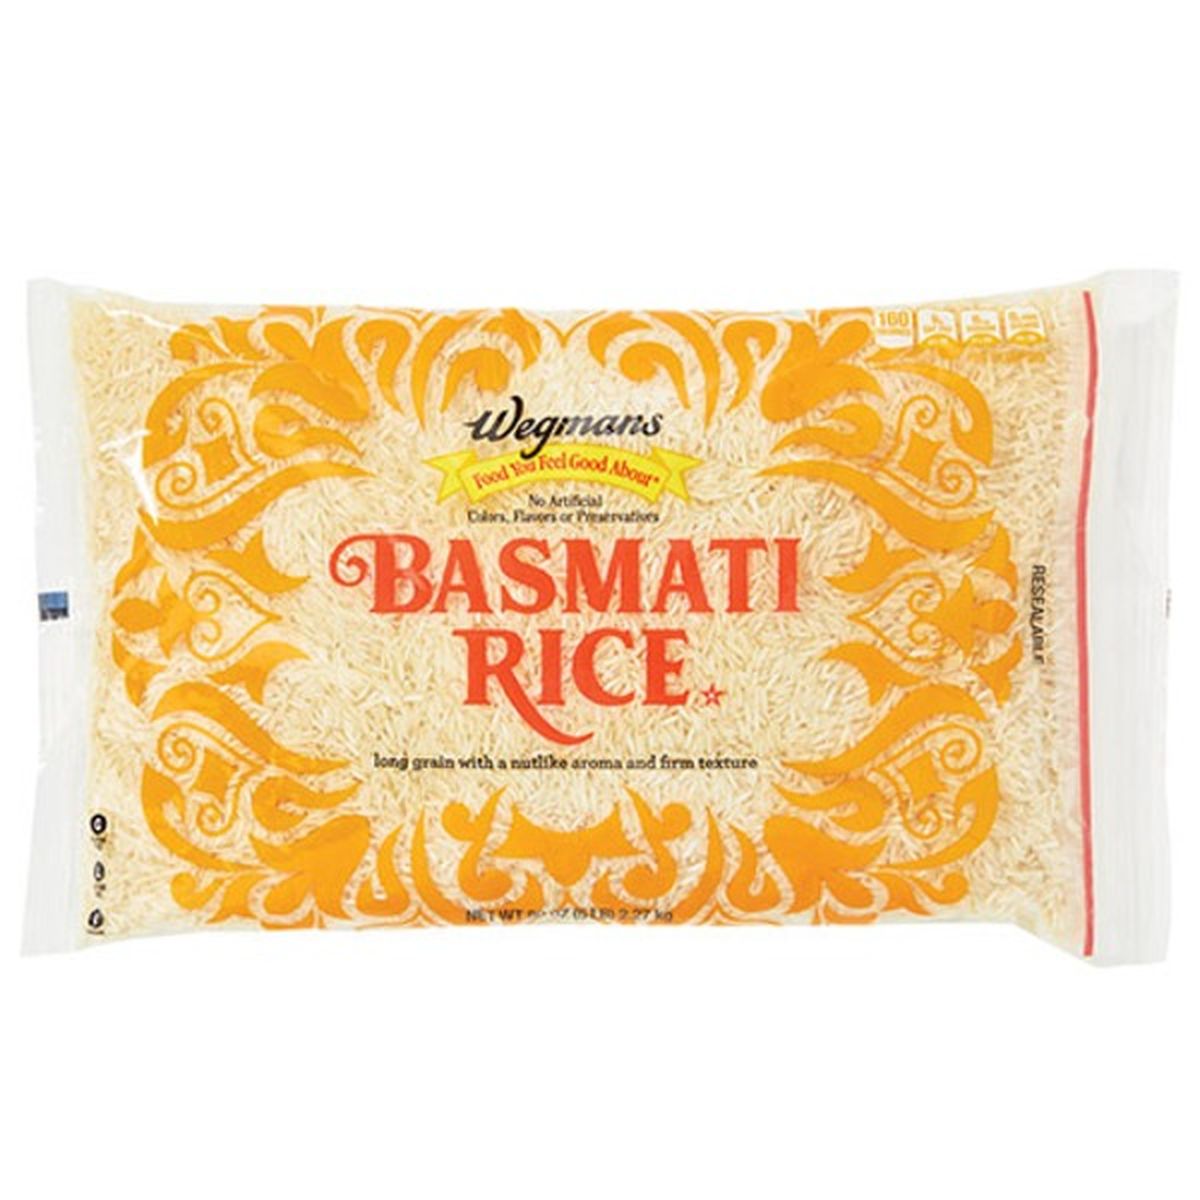 Calories in Wegmans Basmati Rice